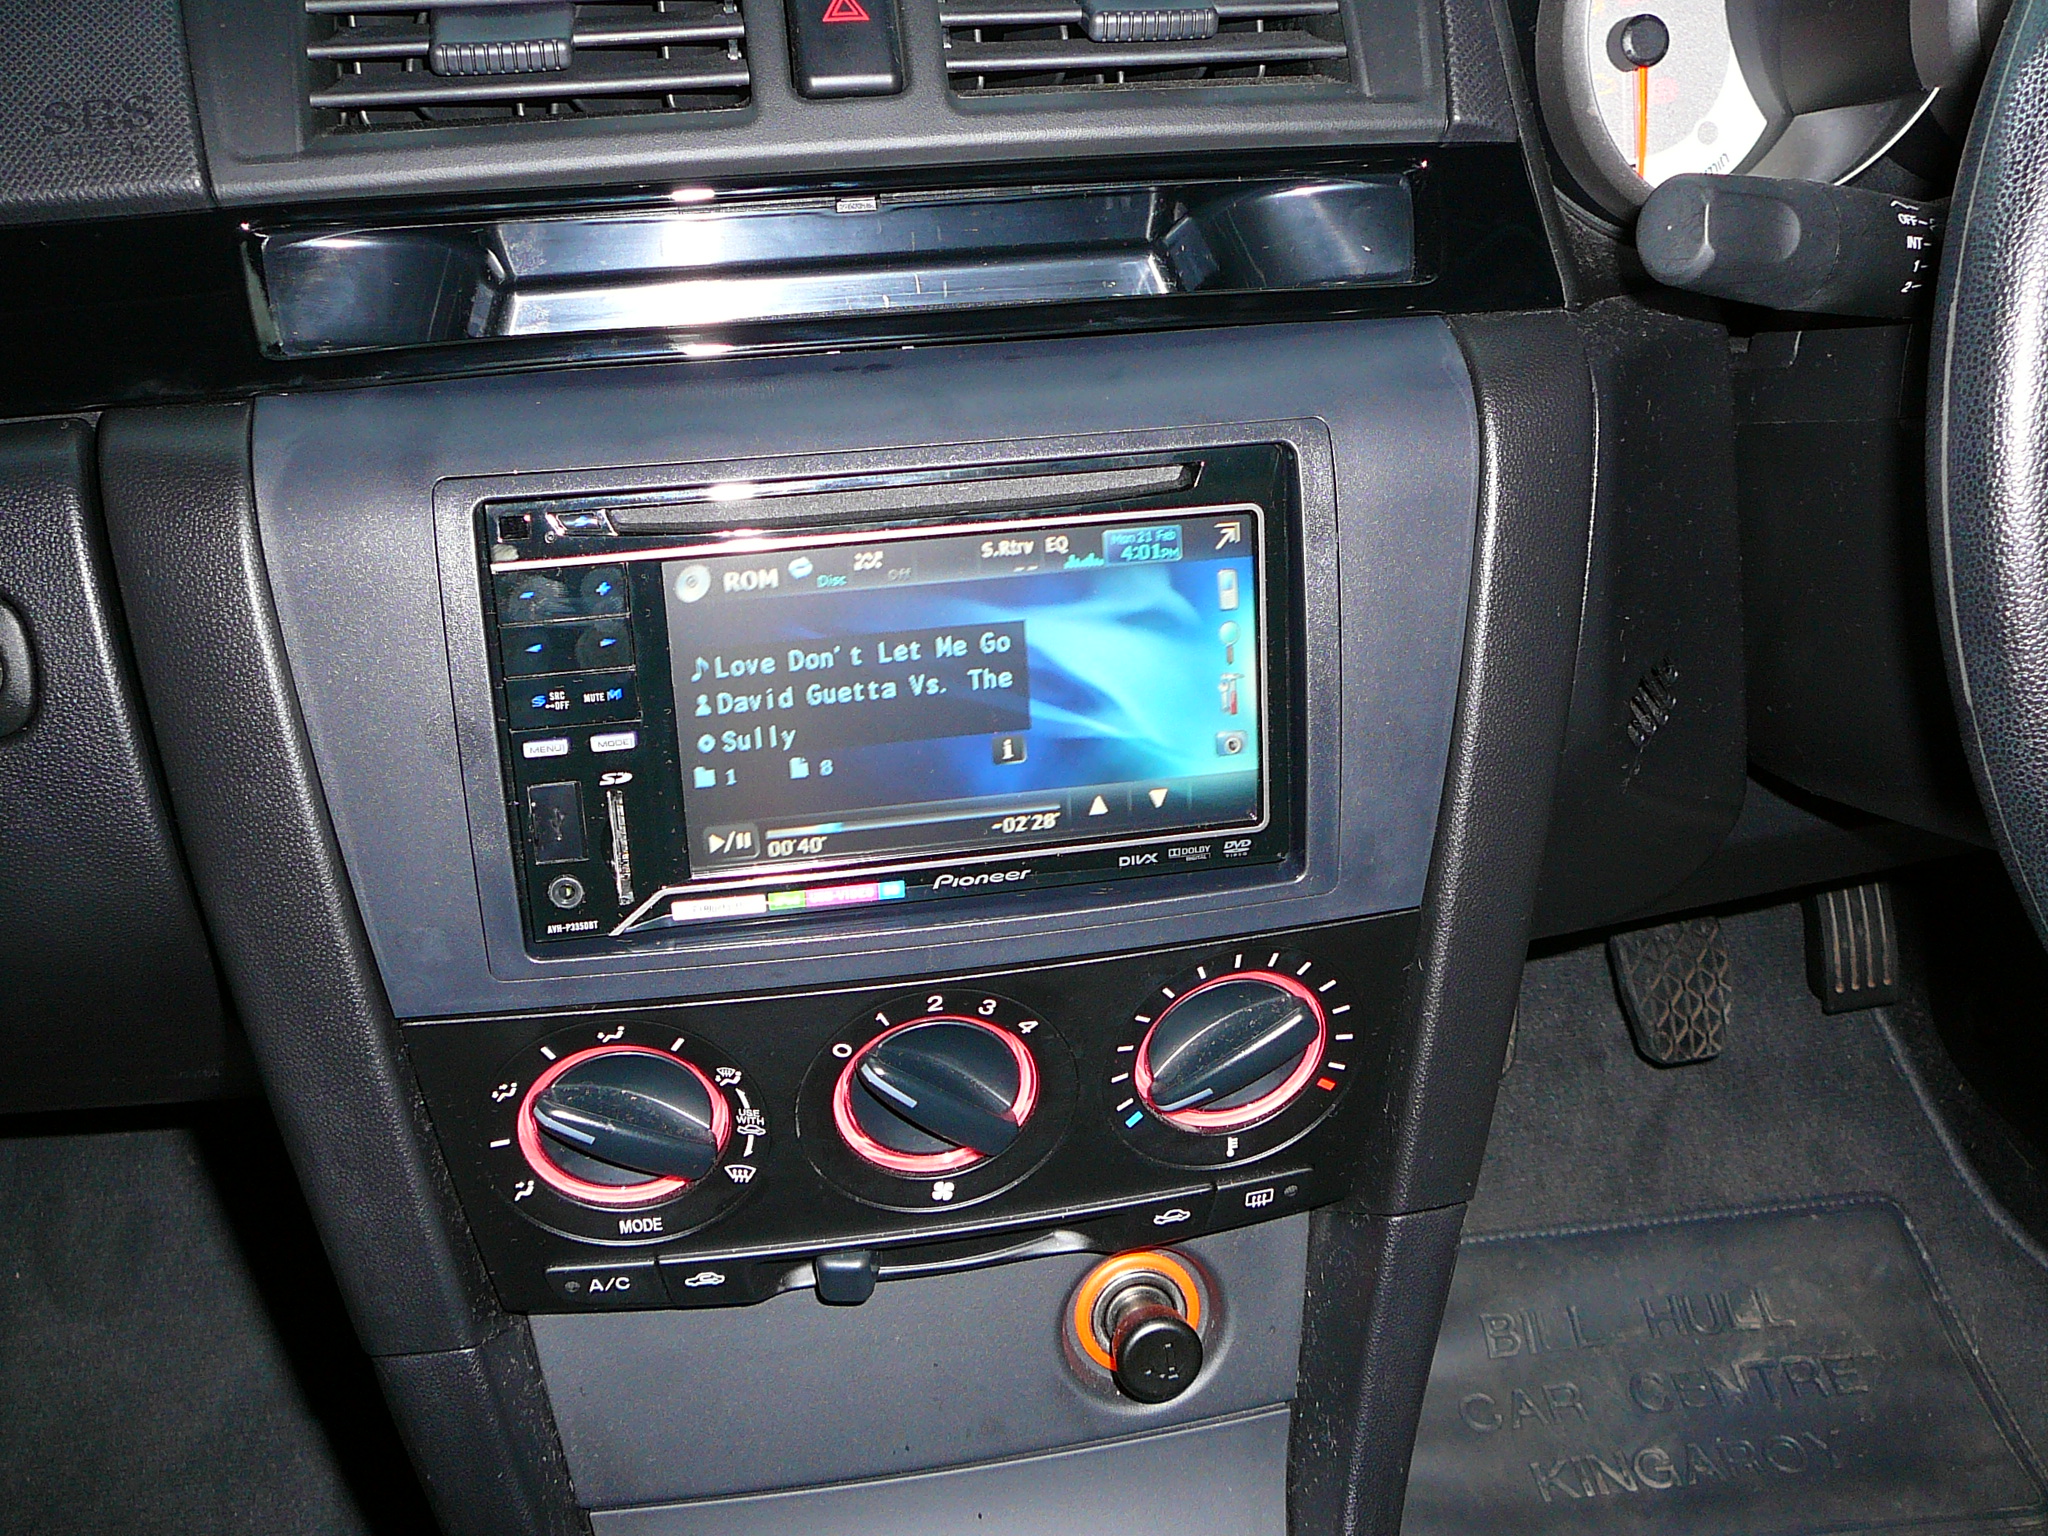 Mazda 3, Pioneer DVD ipod radio with aftermarket dash kit